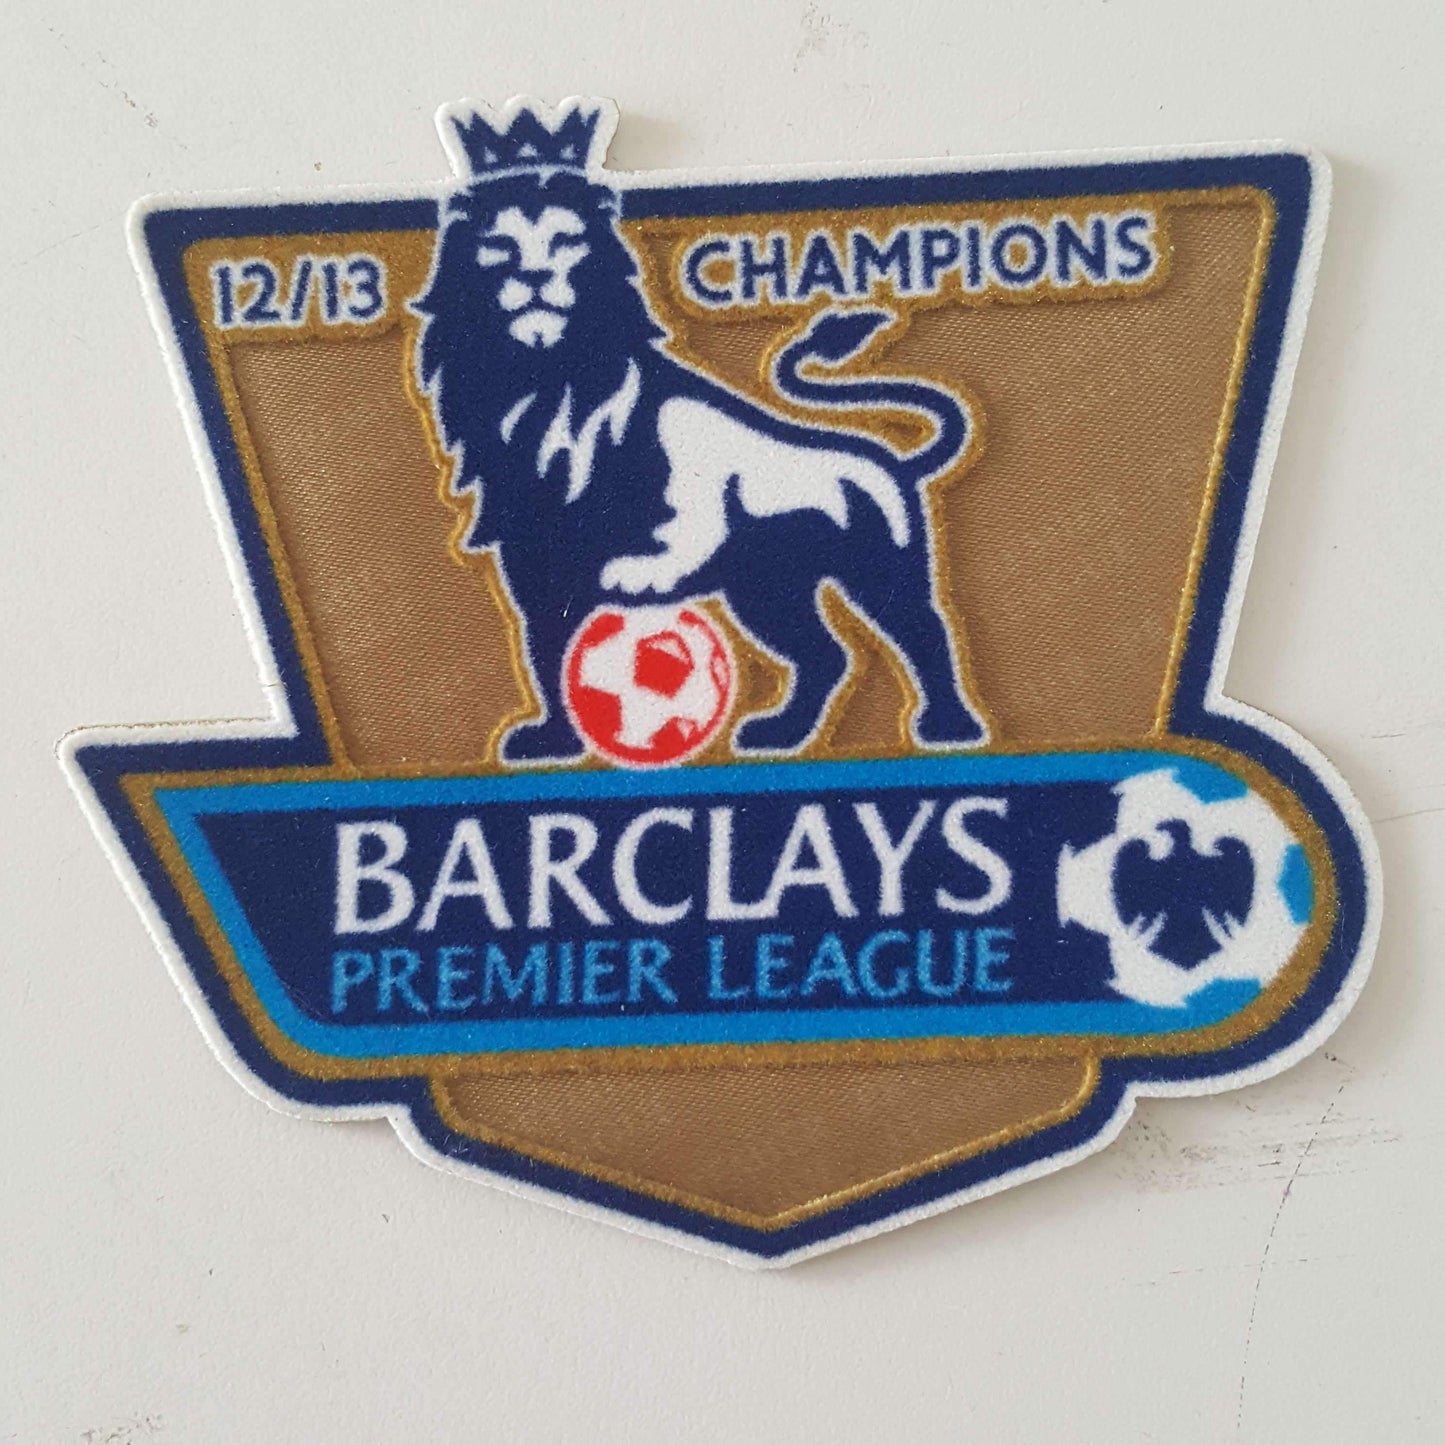 2012/13 Barclays Premier League Champions Patch - ClassicFootballJersey